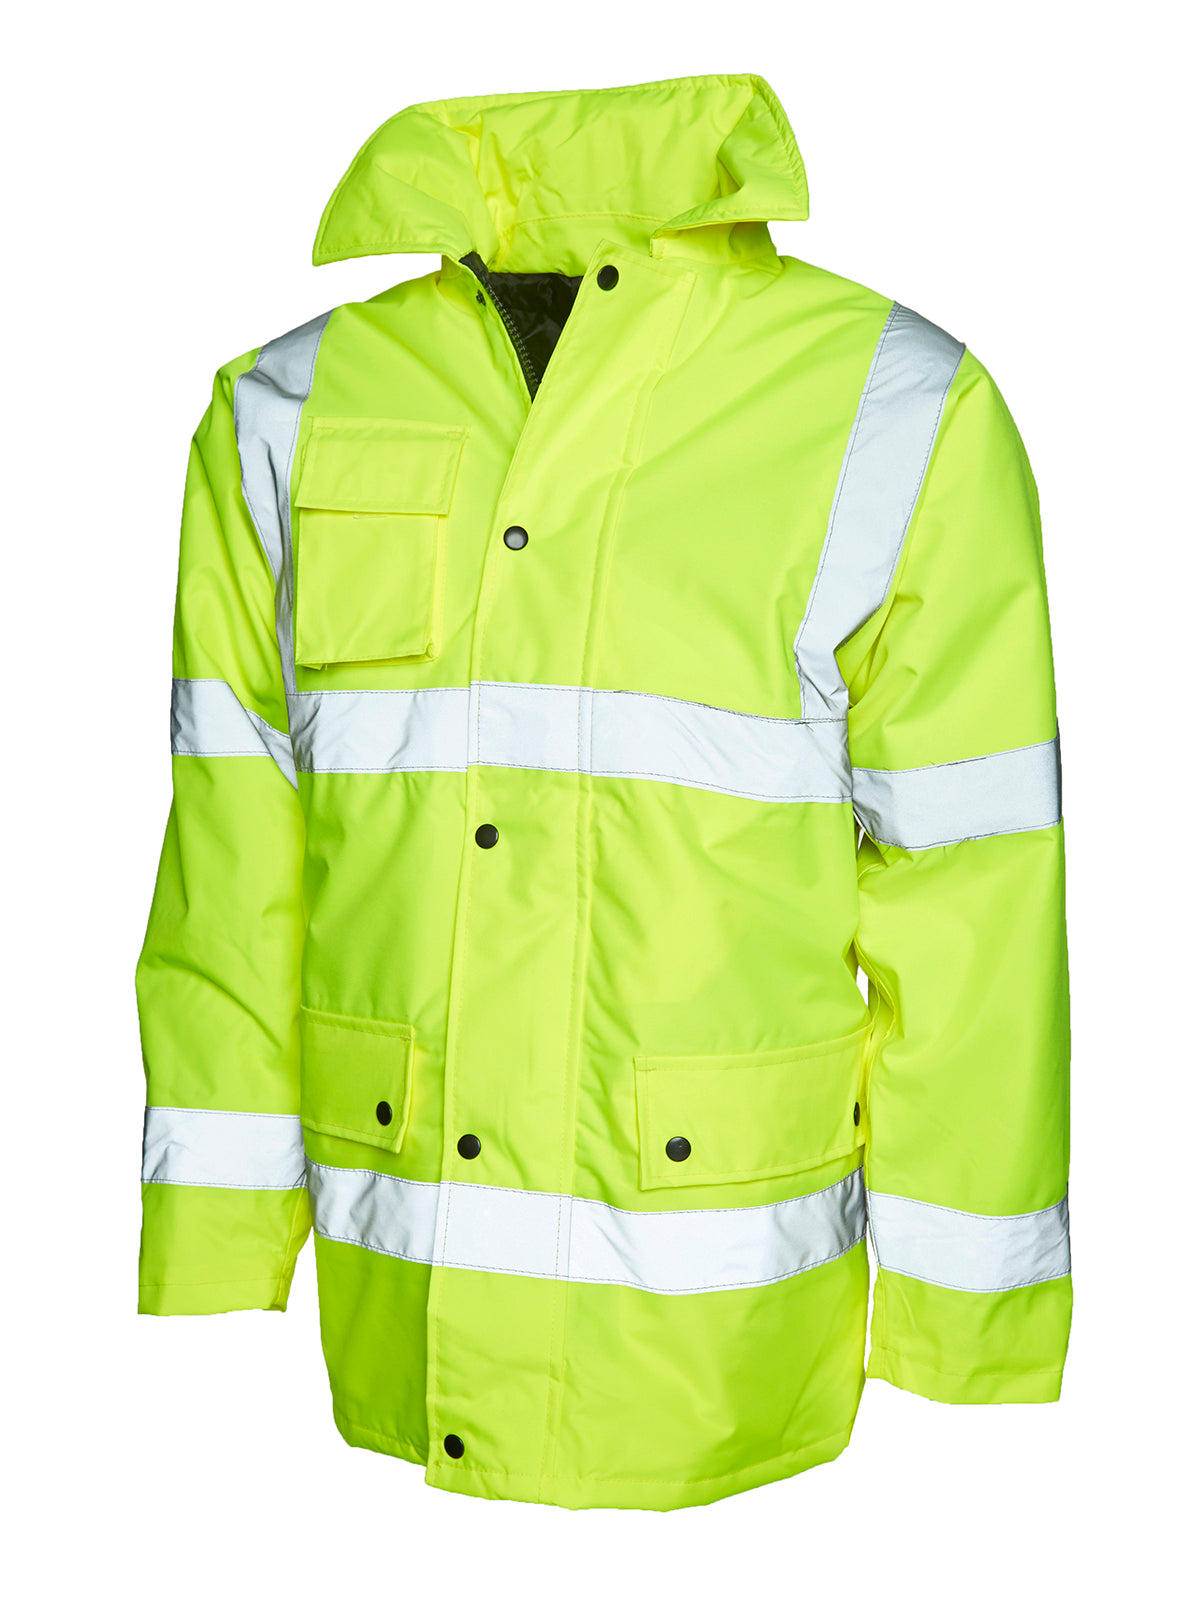 Uneek Road Safety Jacket UC803 - Yellow